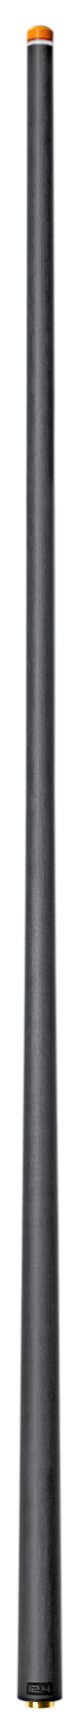 Predator Revo Shaft - Uniloc Joint - 12.4 mm - White Vault Plate